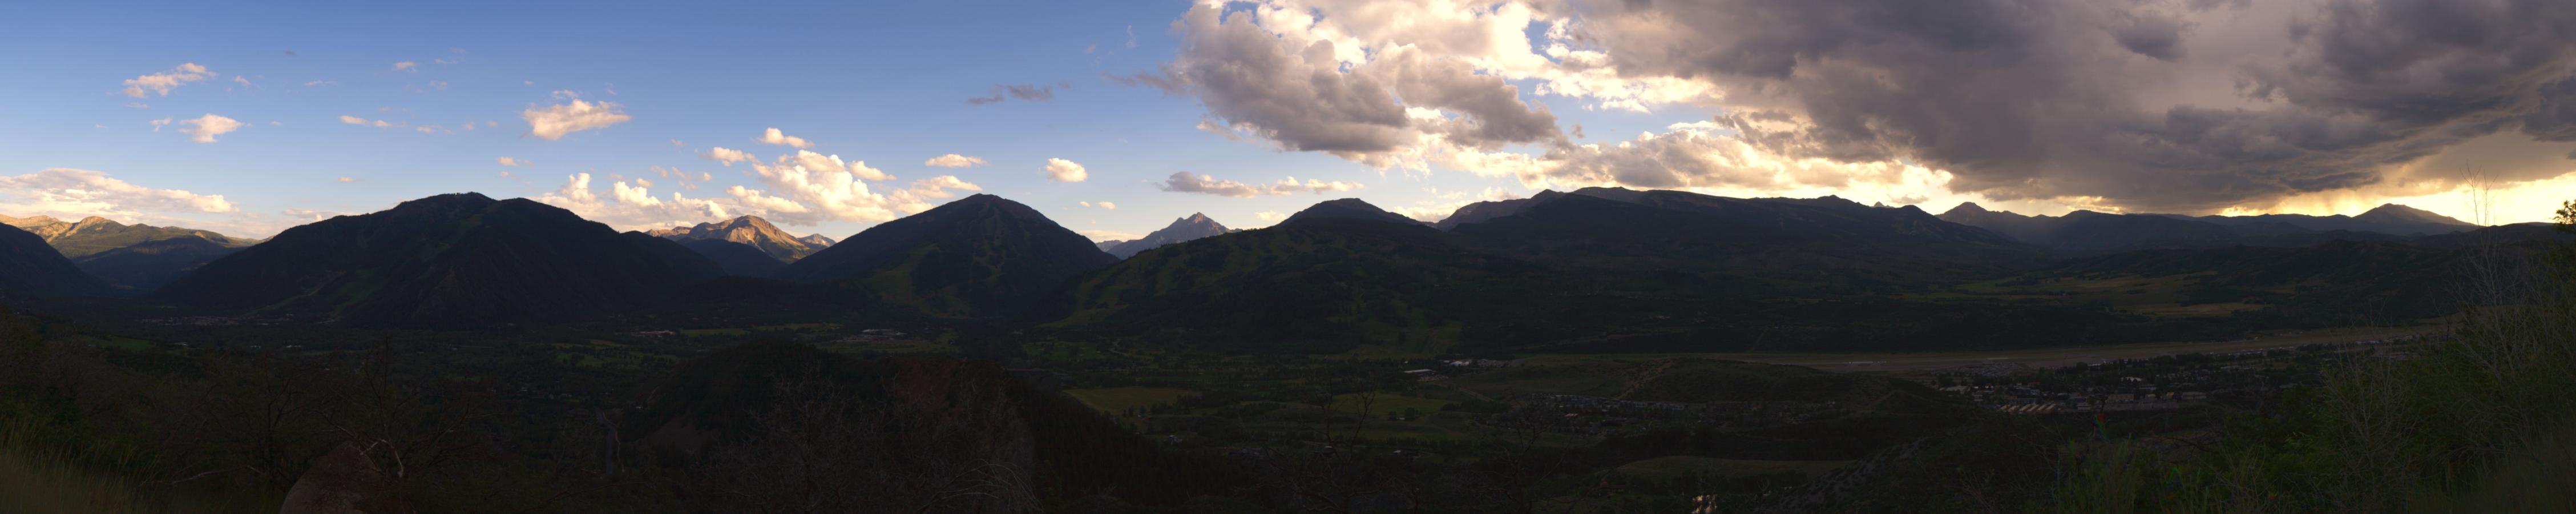 Webcam Aspen Highlands: Power of four